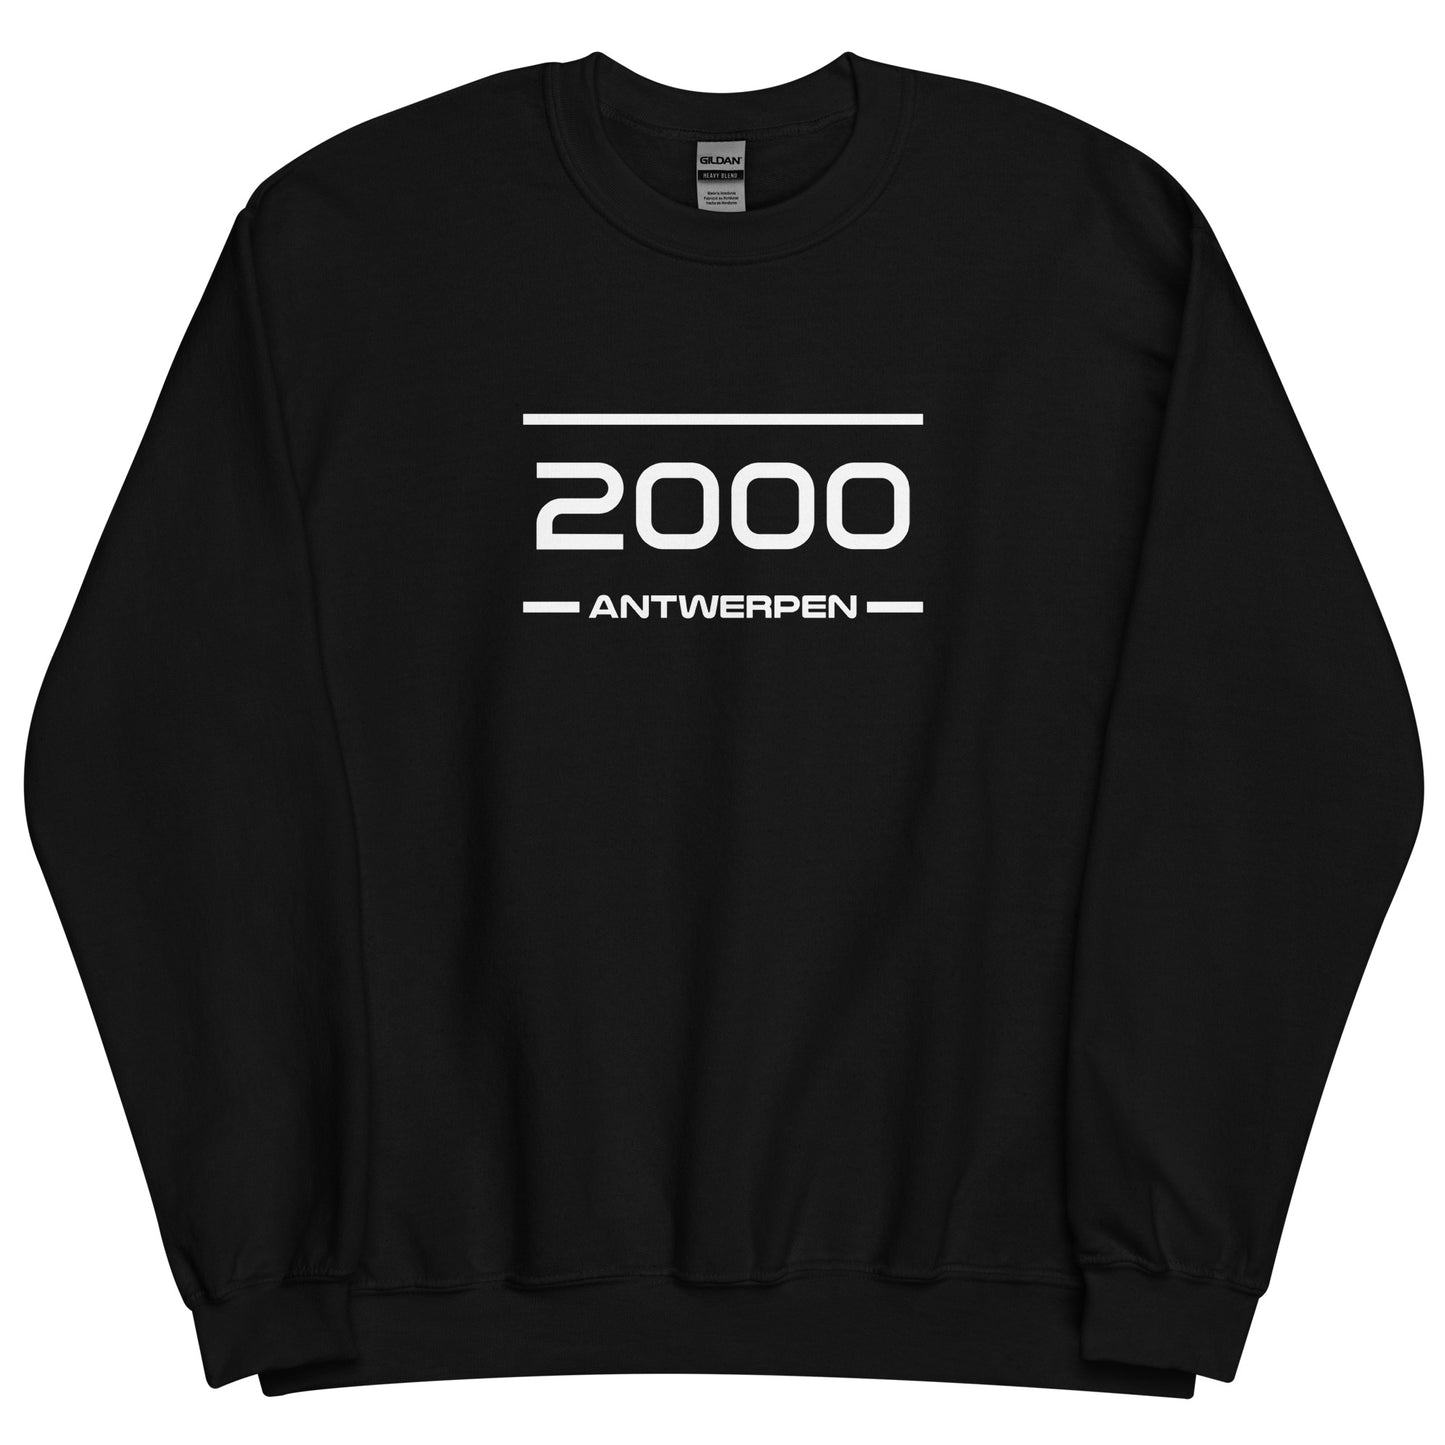 Sweater - 2000 - Antwerpen (M/V)